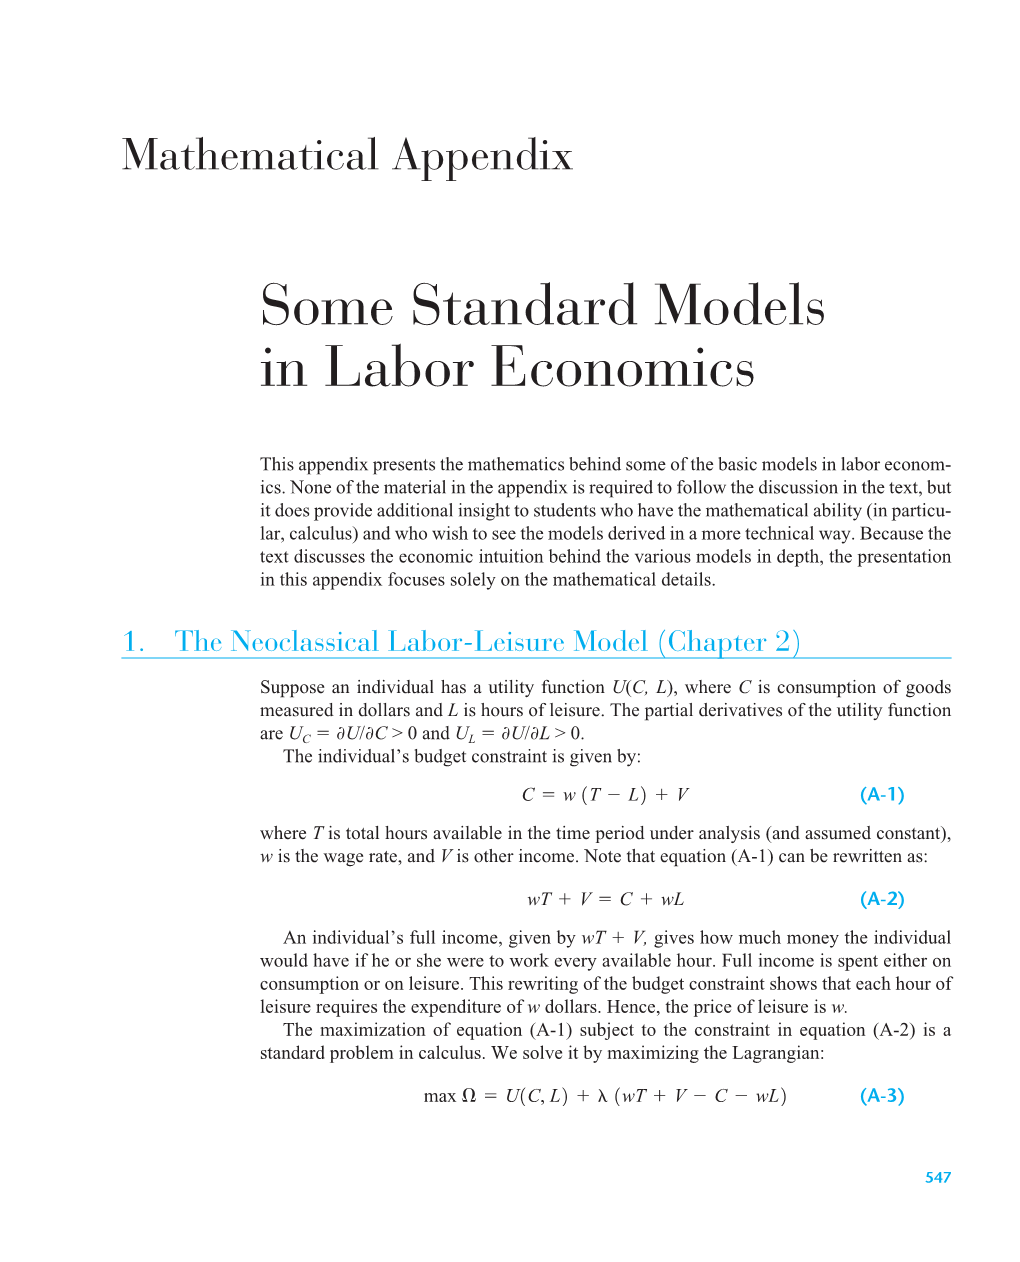 Some Standard Models in Labor Economics